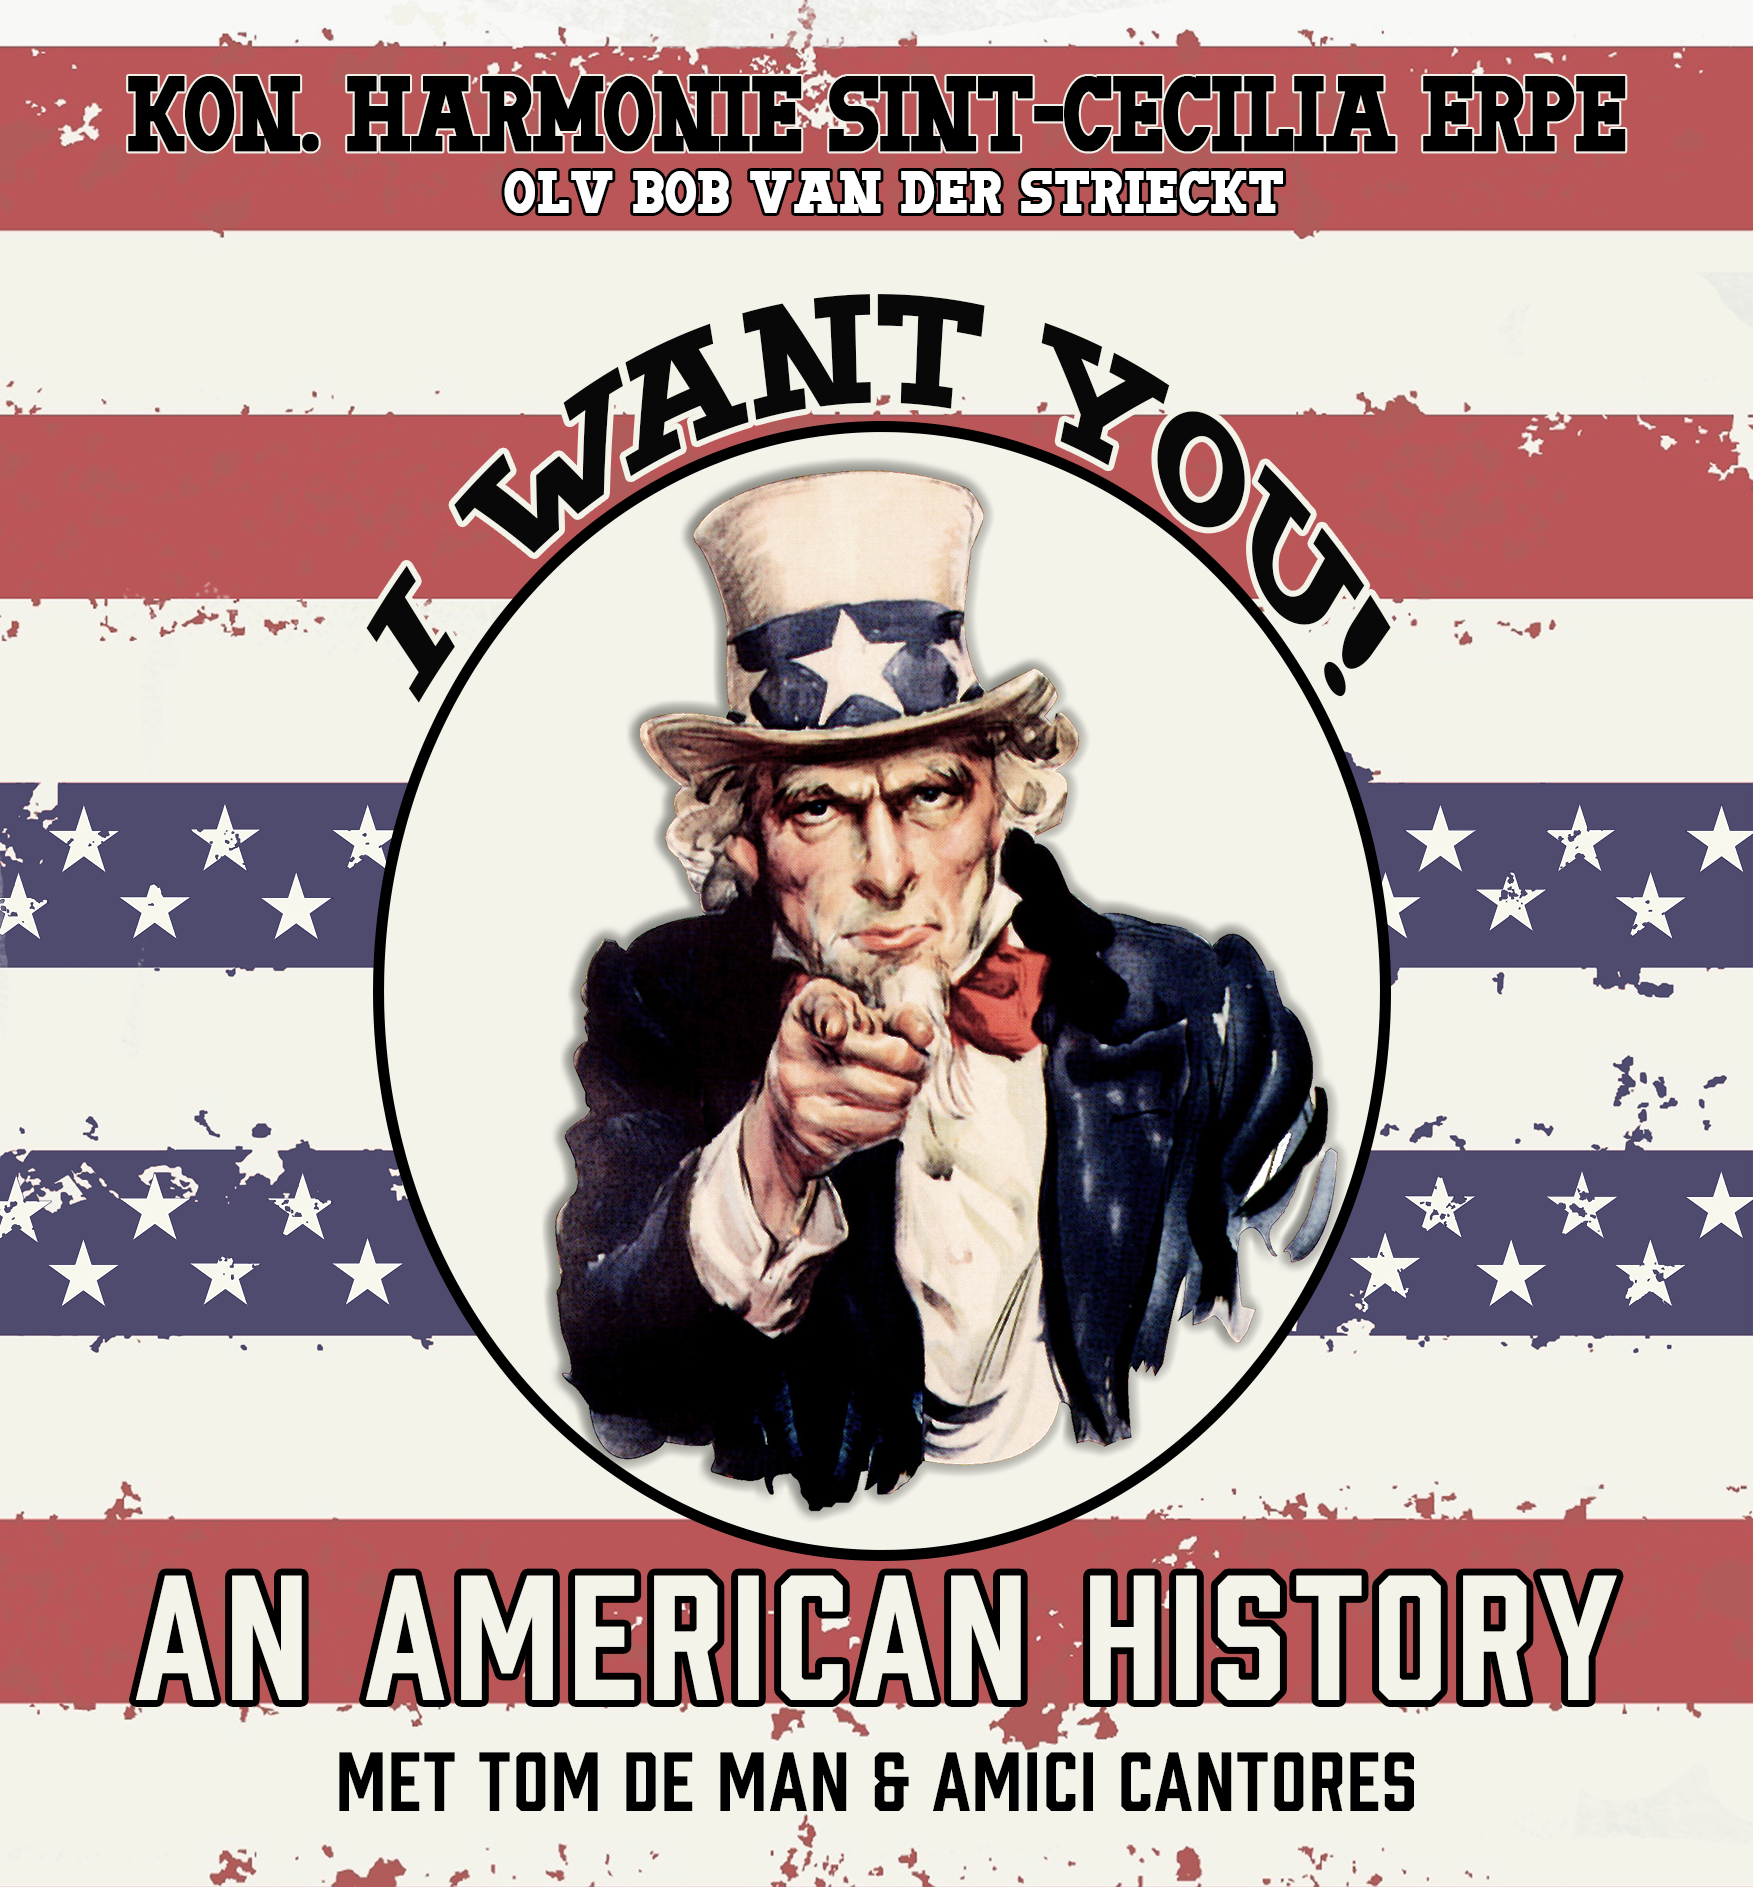 Affiche st cecilia - An American History A5